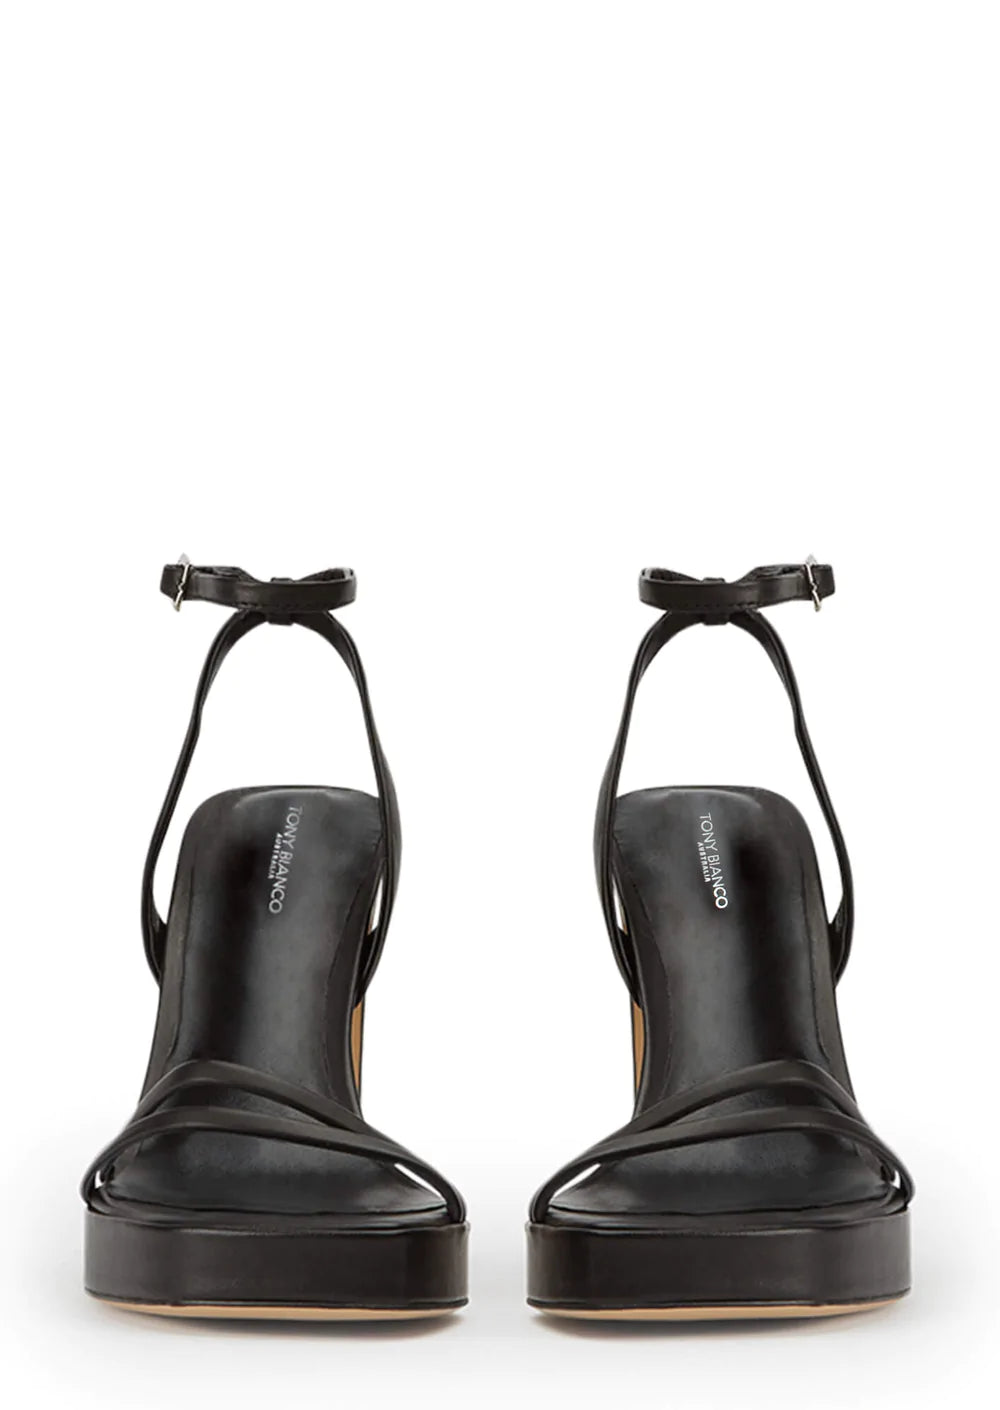 DANDY PLATFORM HEEL - TONY BIANCO - 10, 36, 6.5, 7, 7.5, 8, 9, BLACK, TAN, womens footwear - Stomp Shoes Darwin